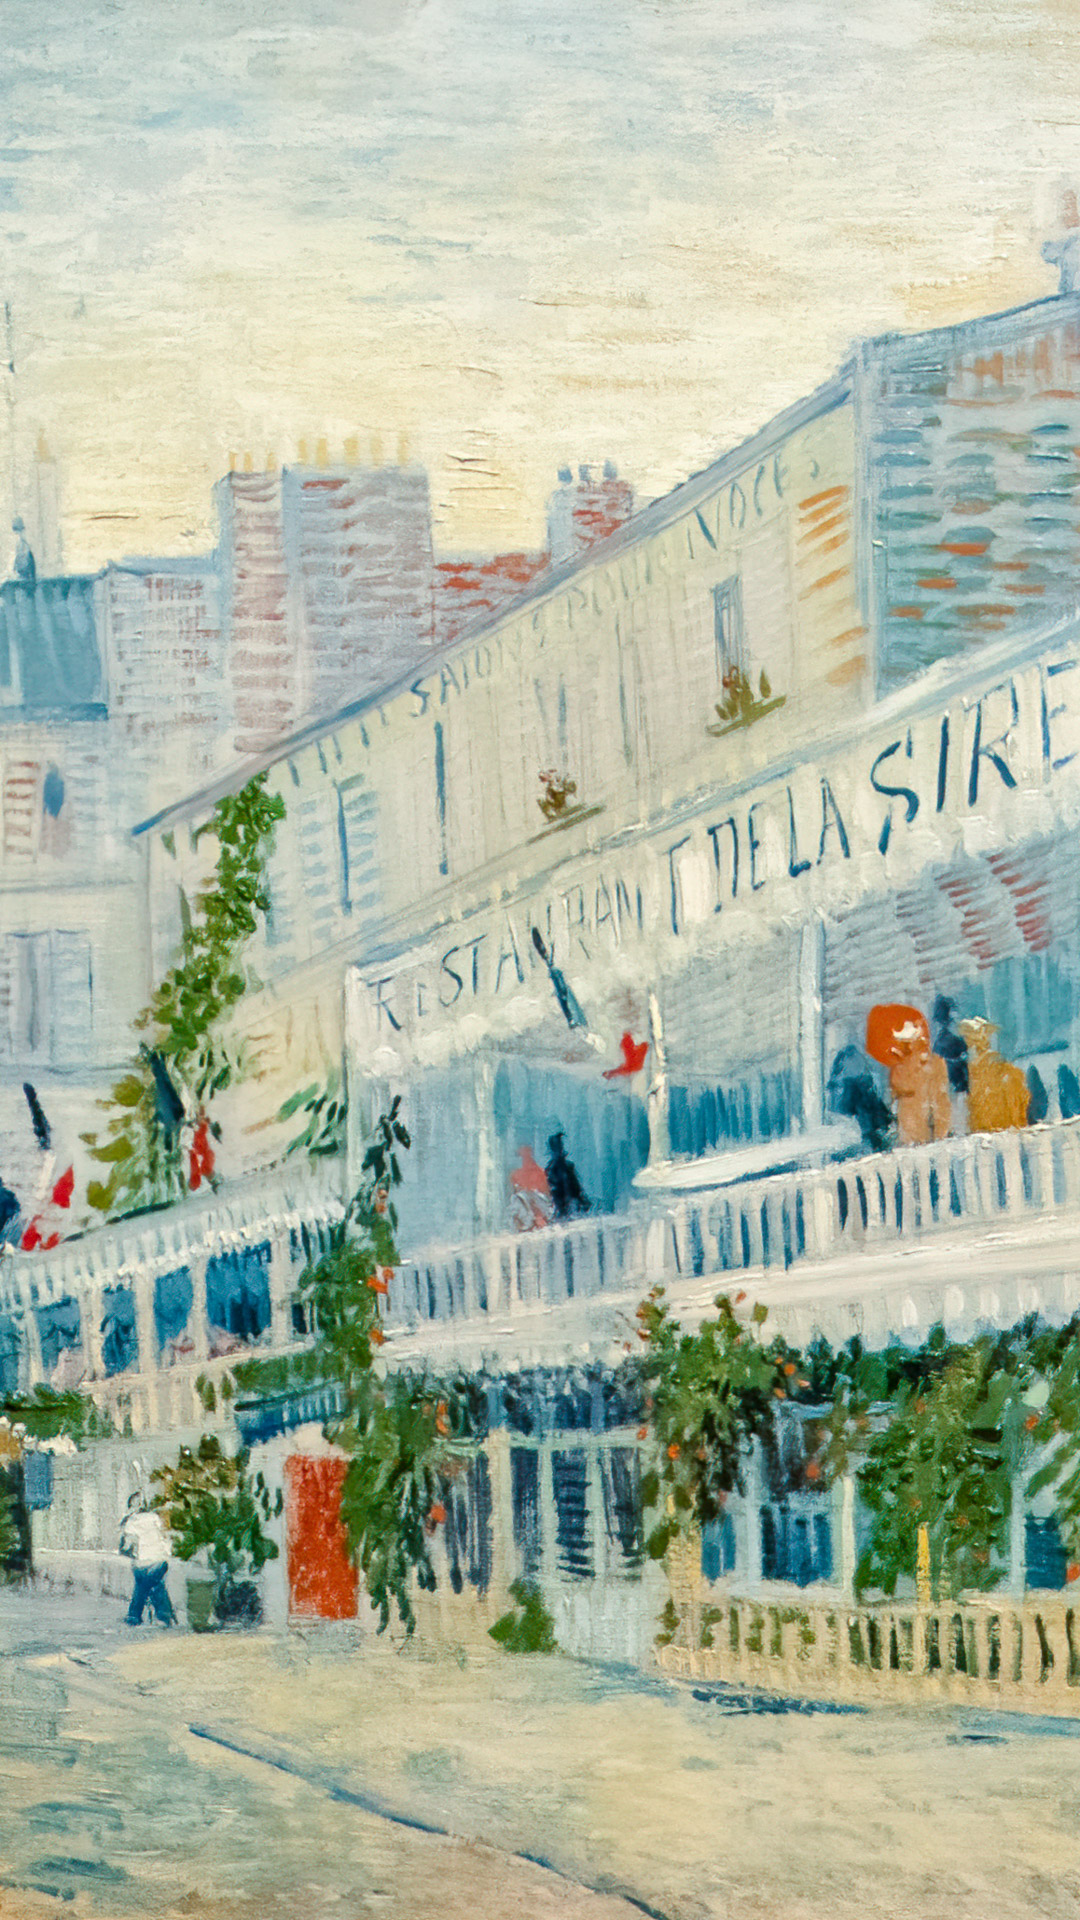 Le Restaurant de la Sirène à Asnières for mobile wallpaper adorns your phone with the enchanting ambiance of Van Gogh's cityscape, creating a captivating visual experience.